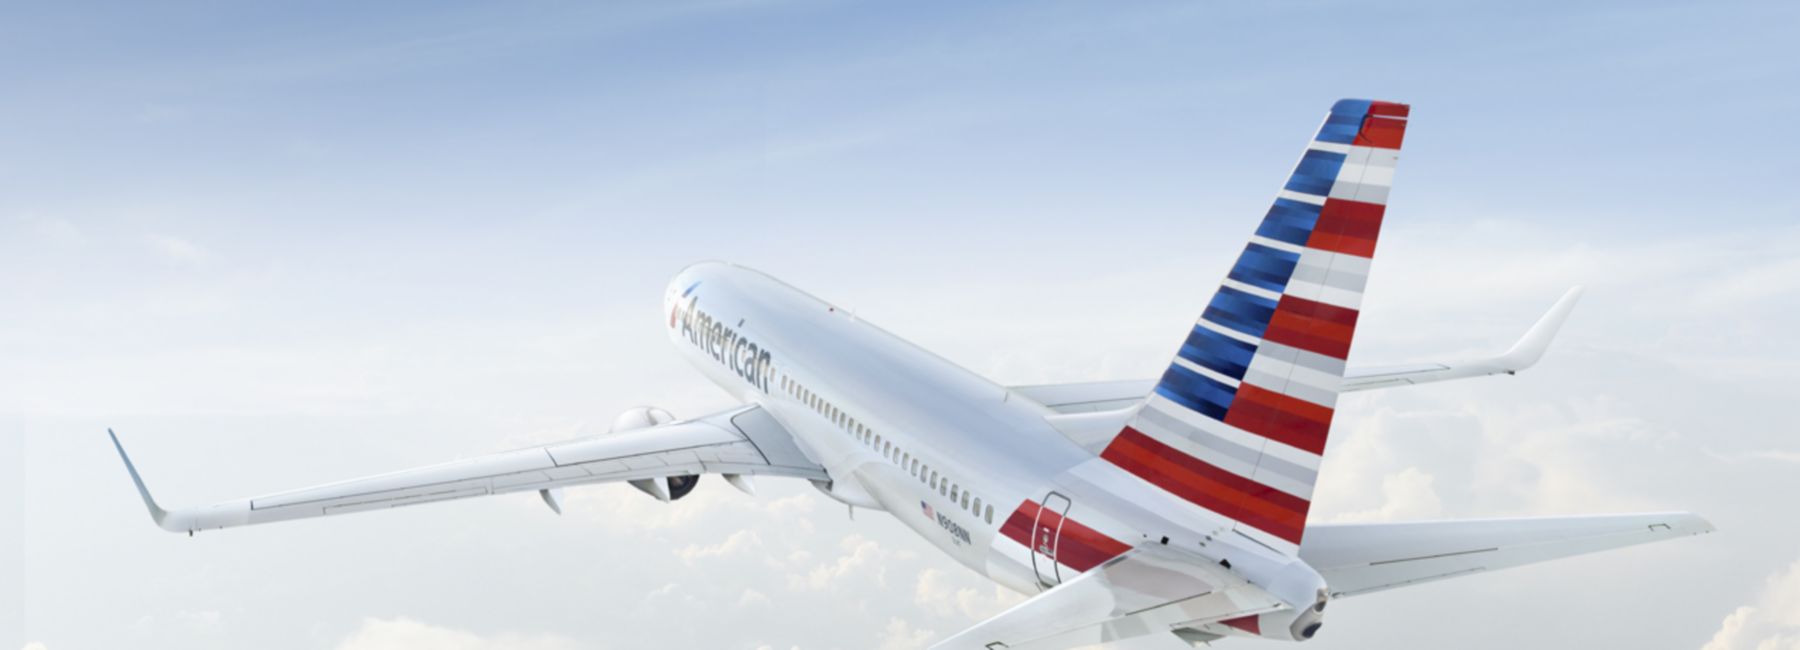 American Airlines reaches cruising altitude